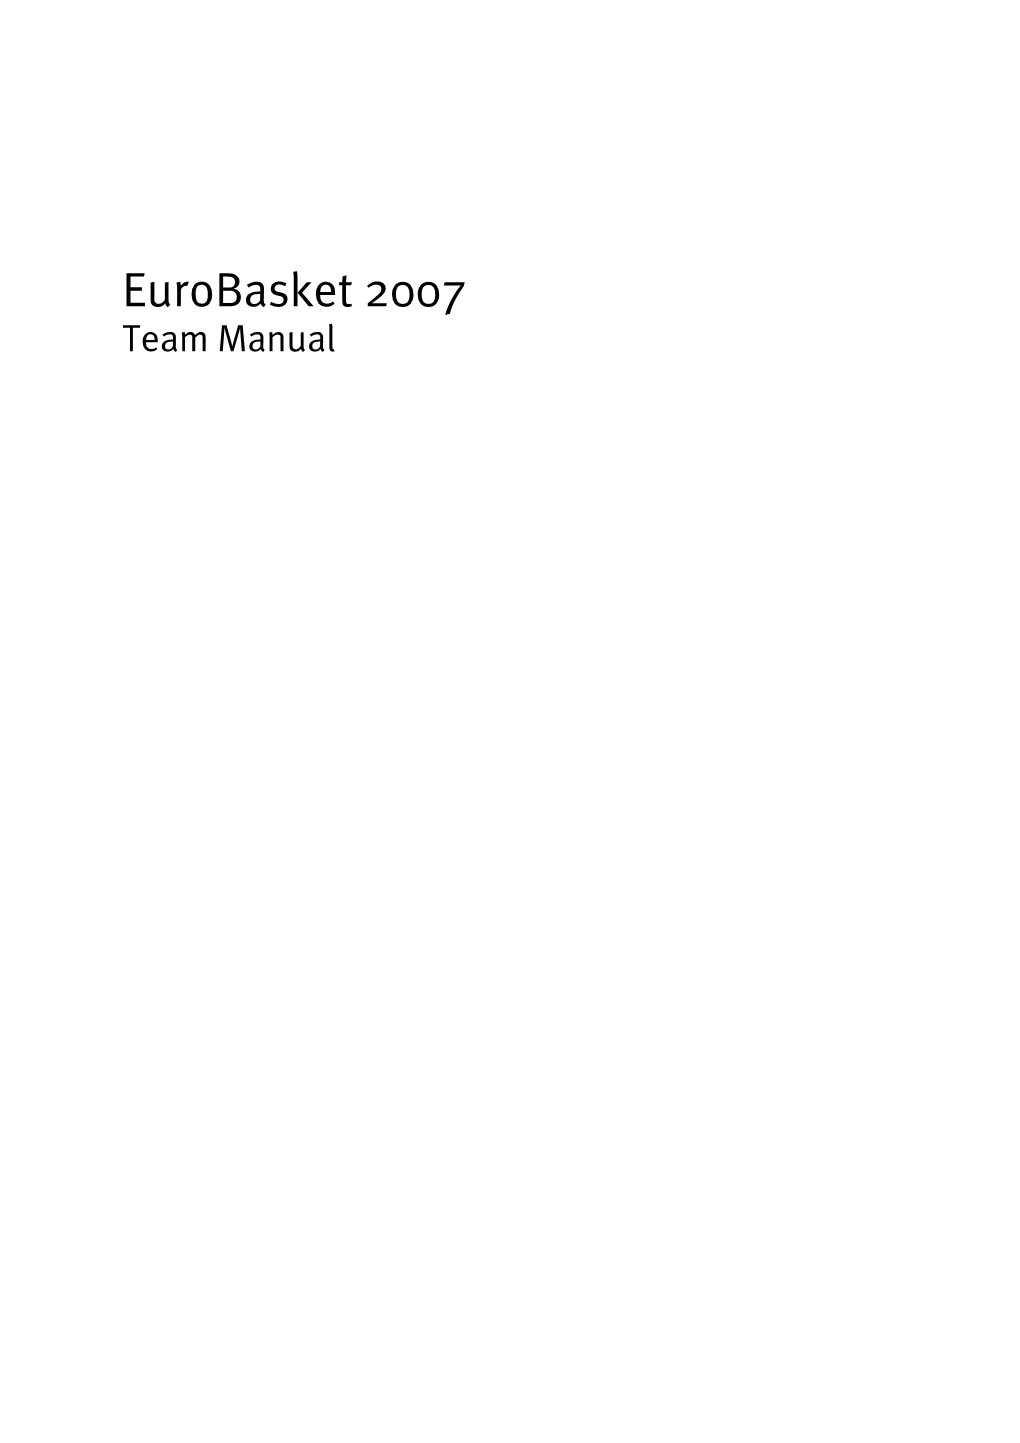 Eurobasket 2007 Team